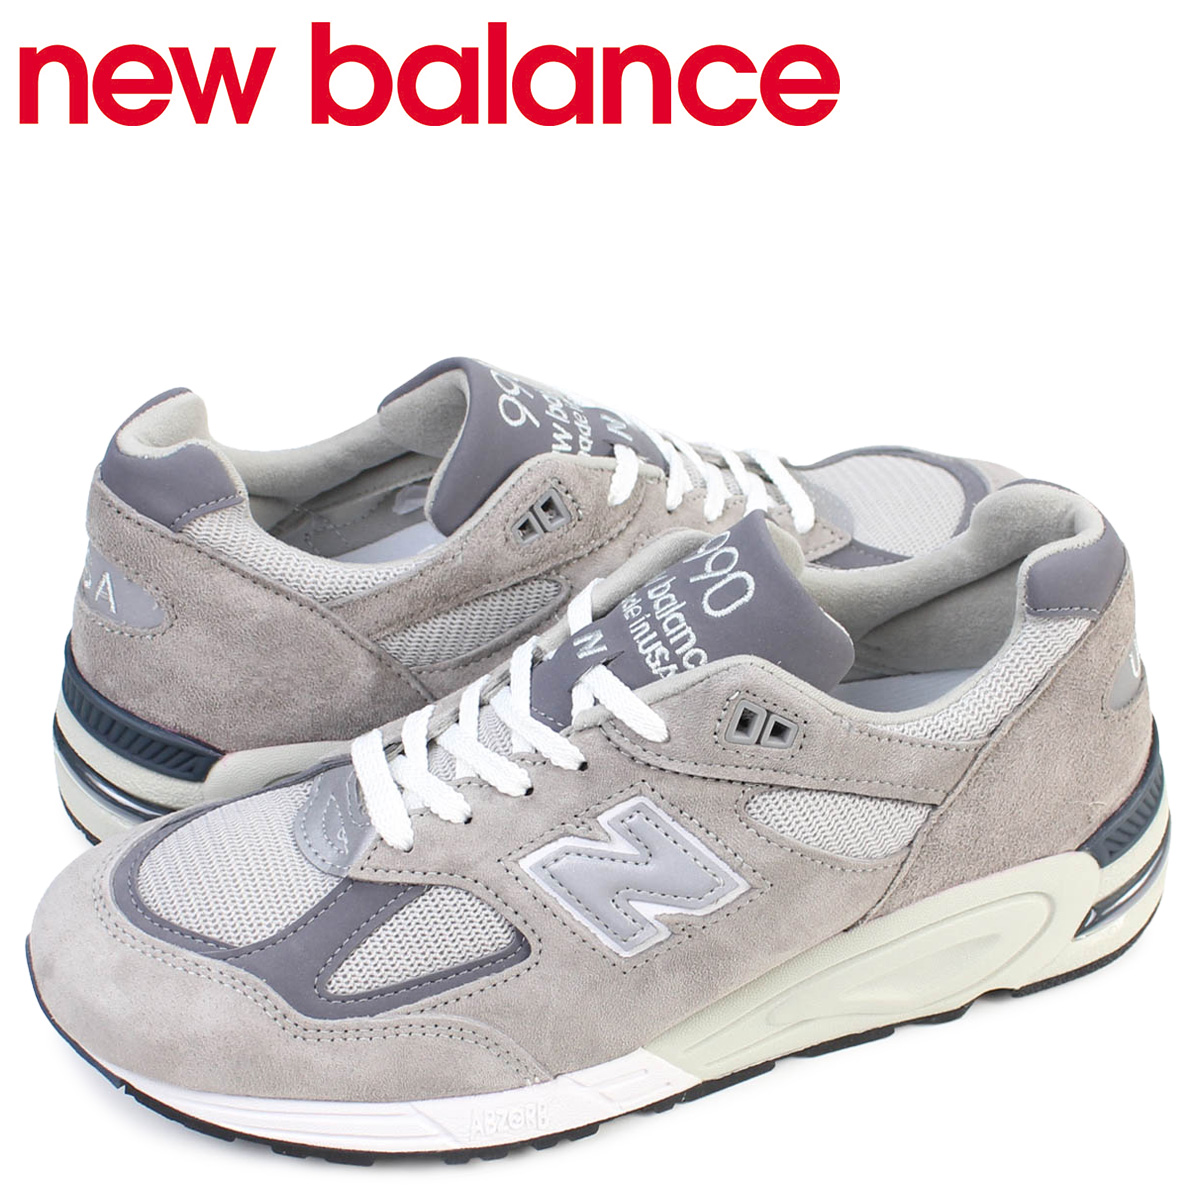 new balance 990 sale